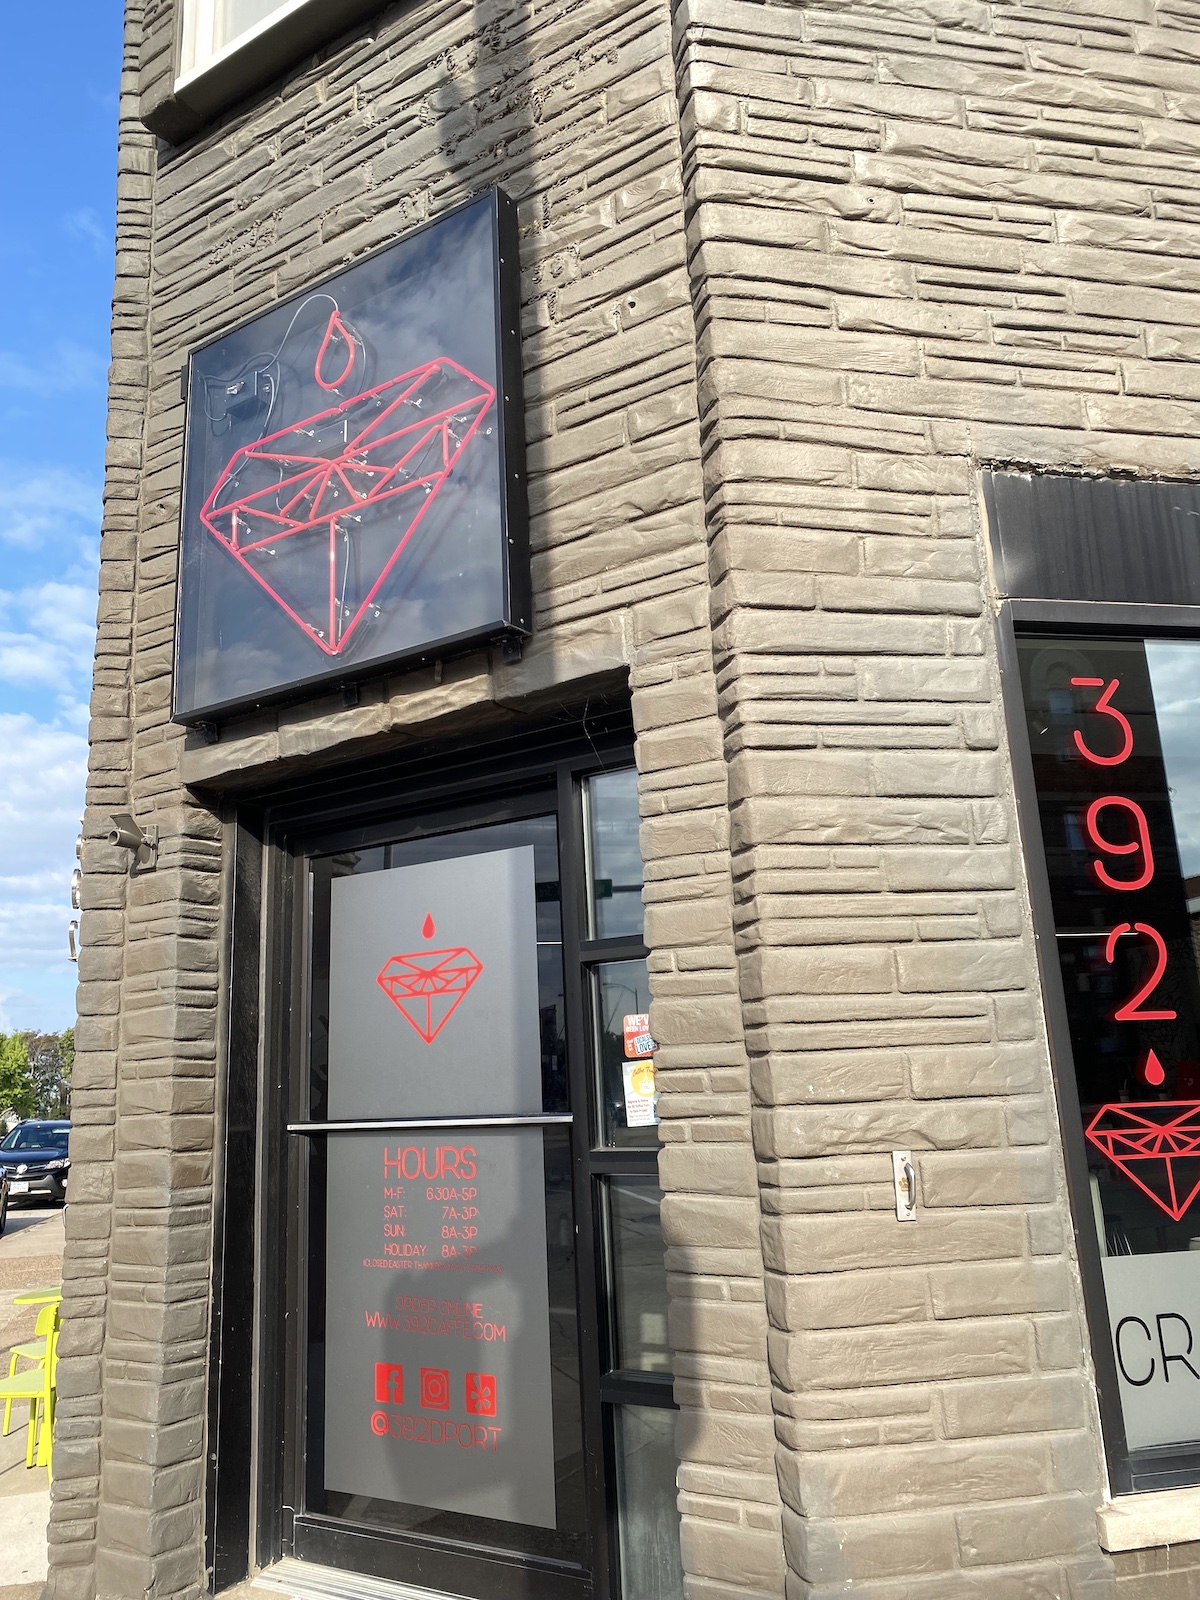 Exterior of 392 Caffe in Davenport, Iowa